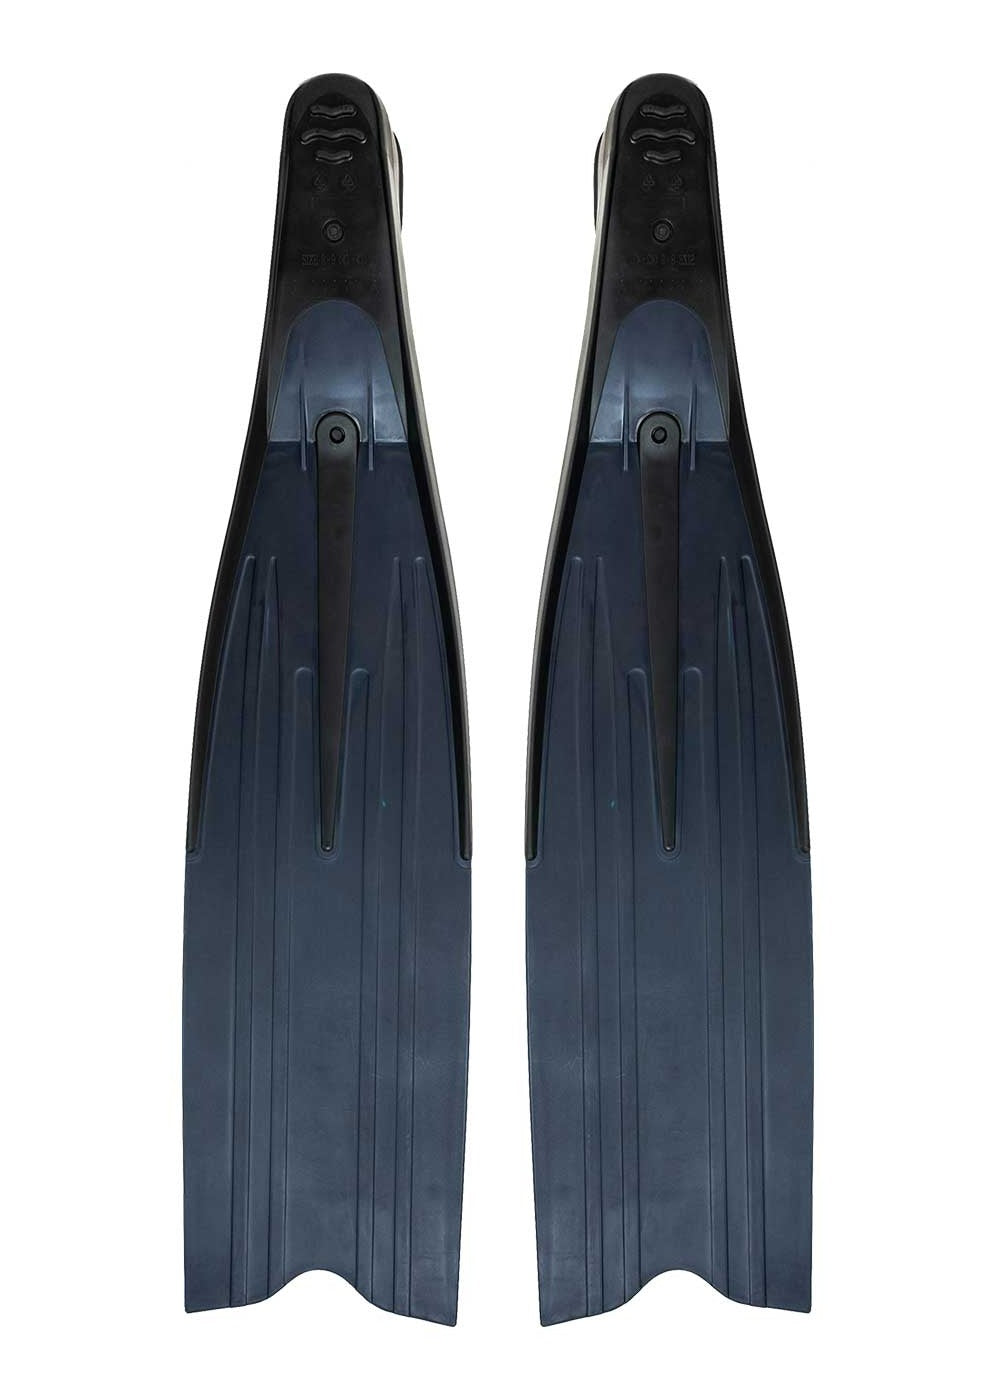 Spearo Long Blade Spearfishing Fins